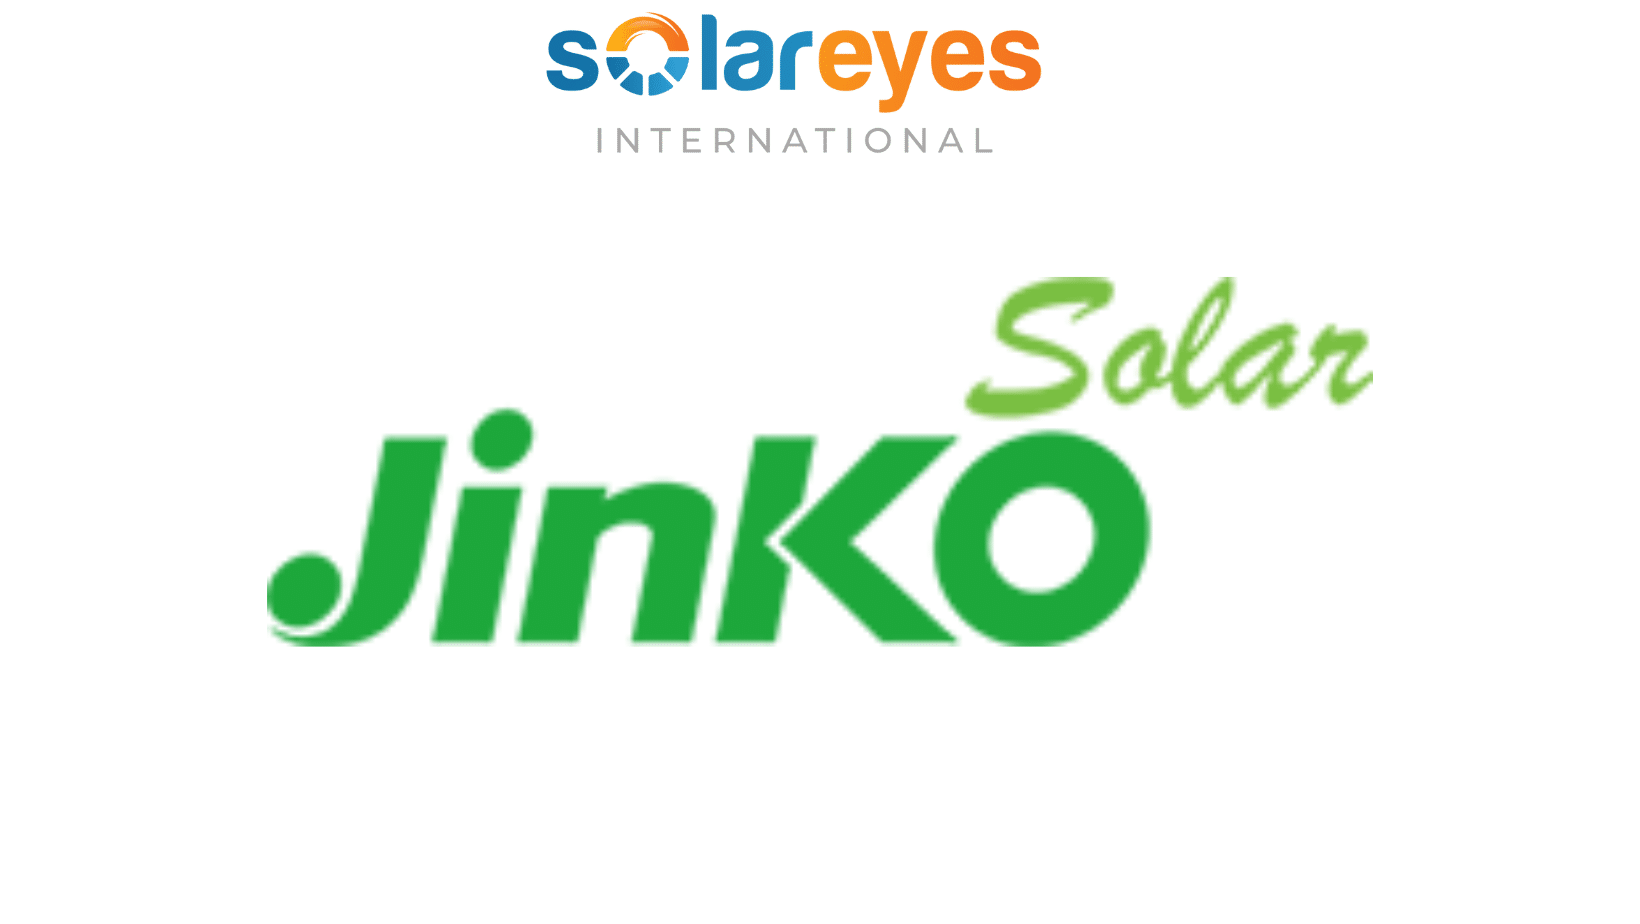 JinkoSolar (NYSE: JKS) is hiring a Utility Energy Storage Solutions Engineer